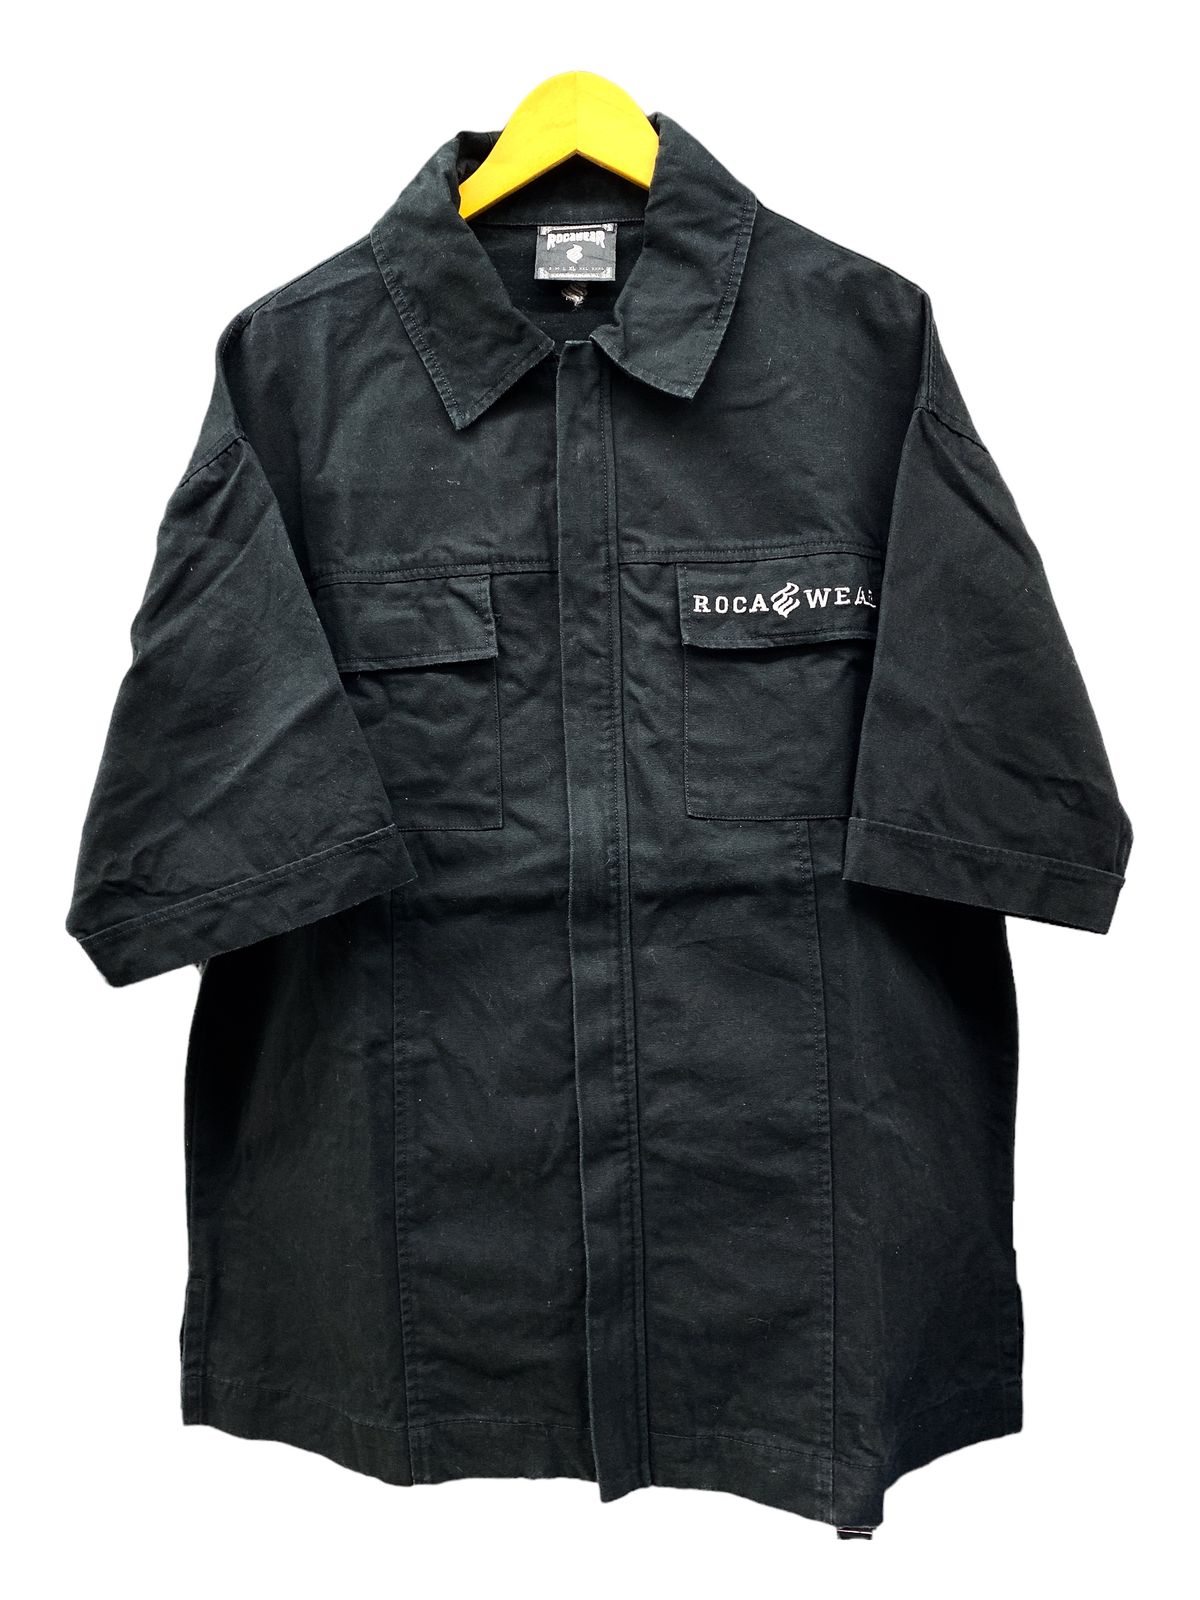 ROCAWEAR (ロカウェア) 半袖シャツ 半袖ジップアップジャケット ワーク